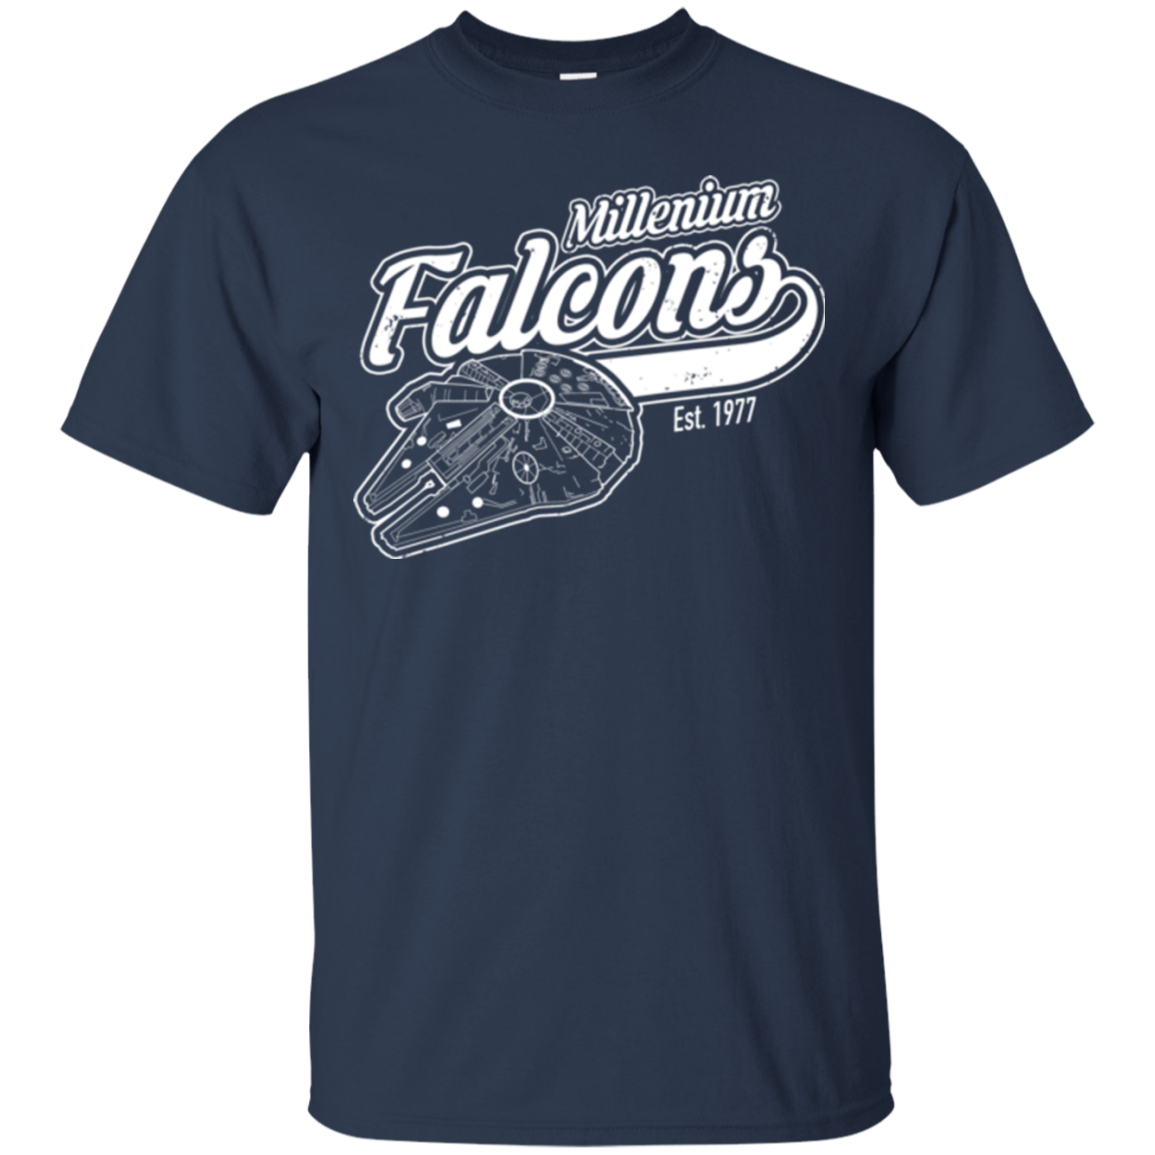 Millenium falcons T-Shirt